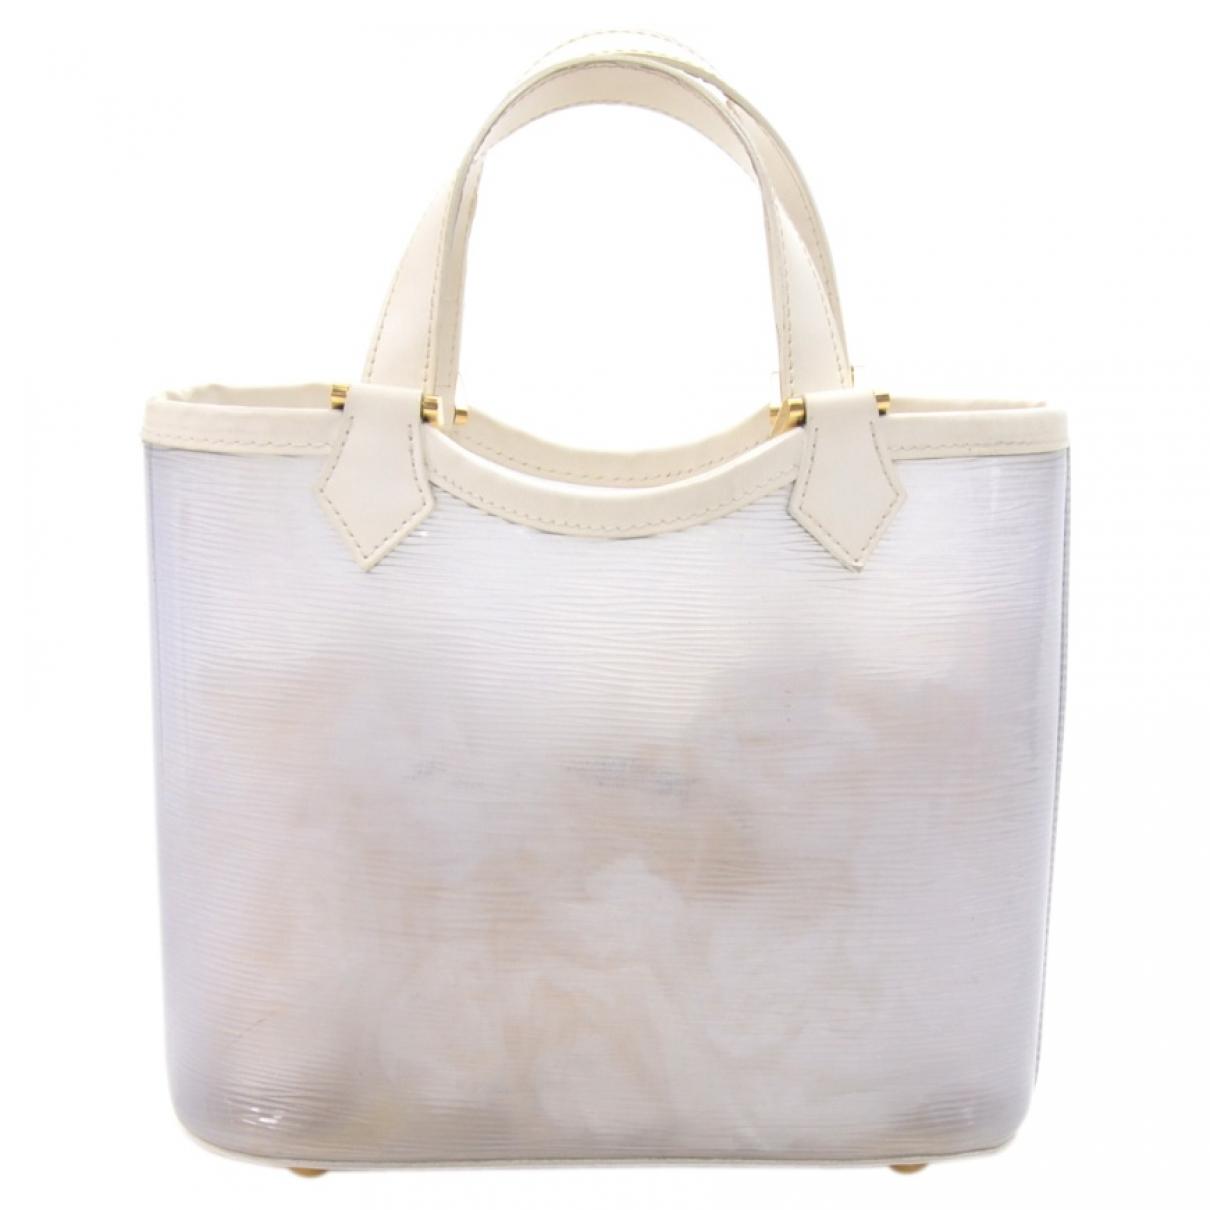 Lyst - Louis Vuitton Vintage White Synthetic Handbag in White